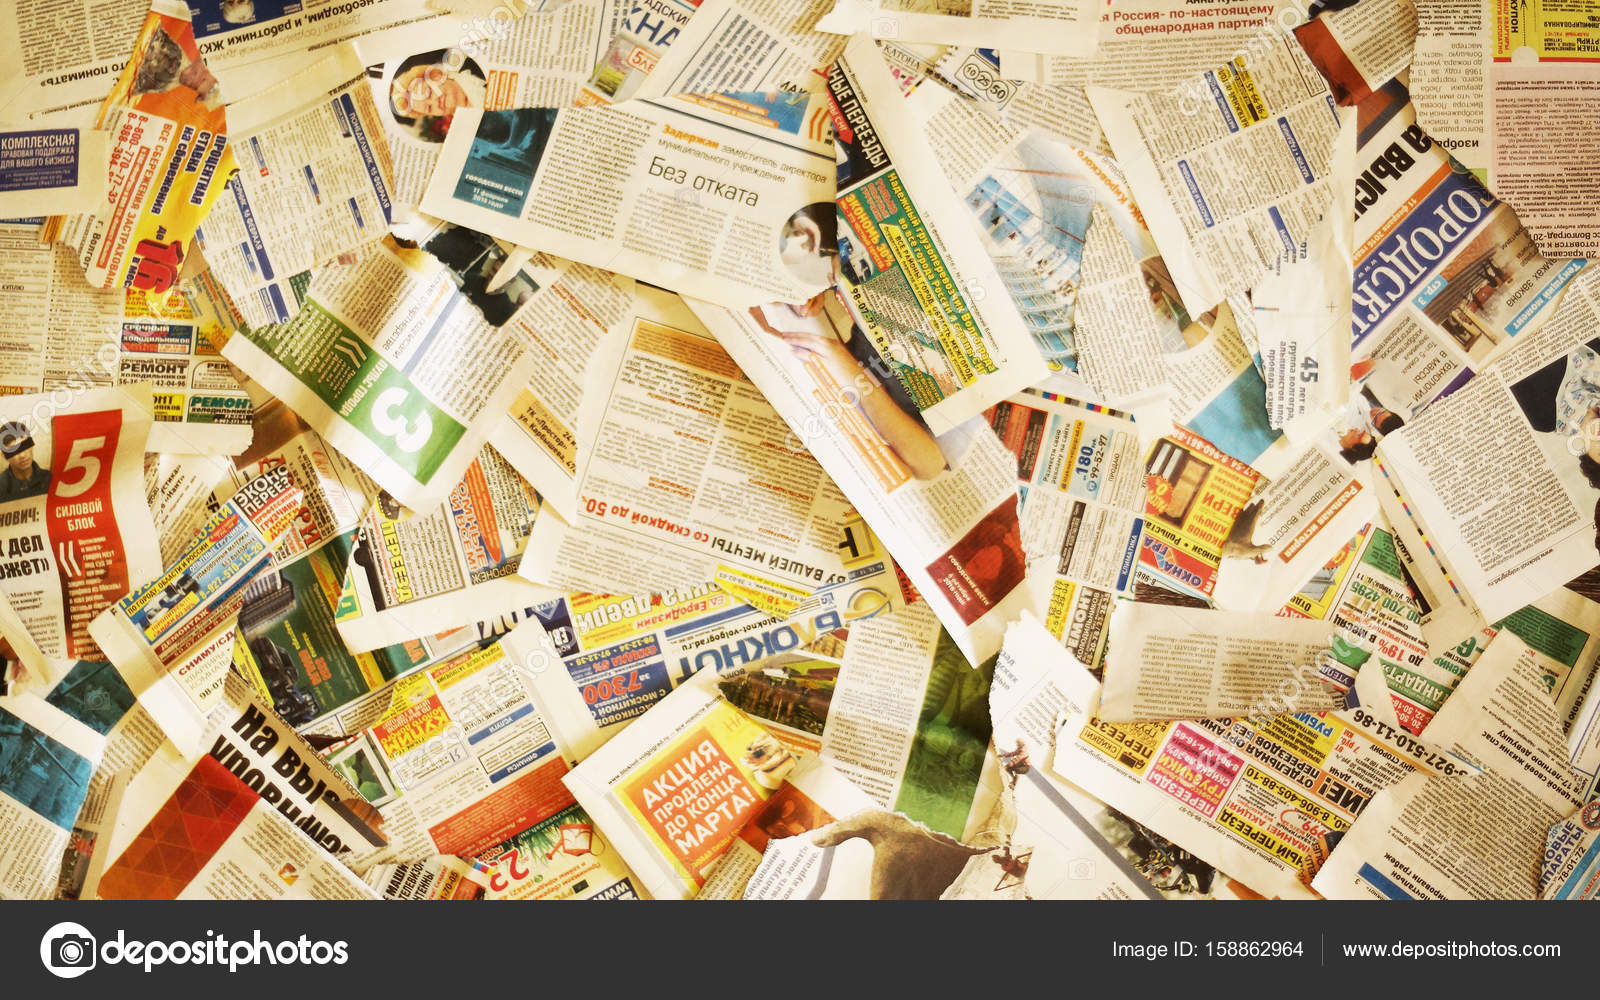 Fondo de textura de periódico — Foto de stock © fedboy #158862964